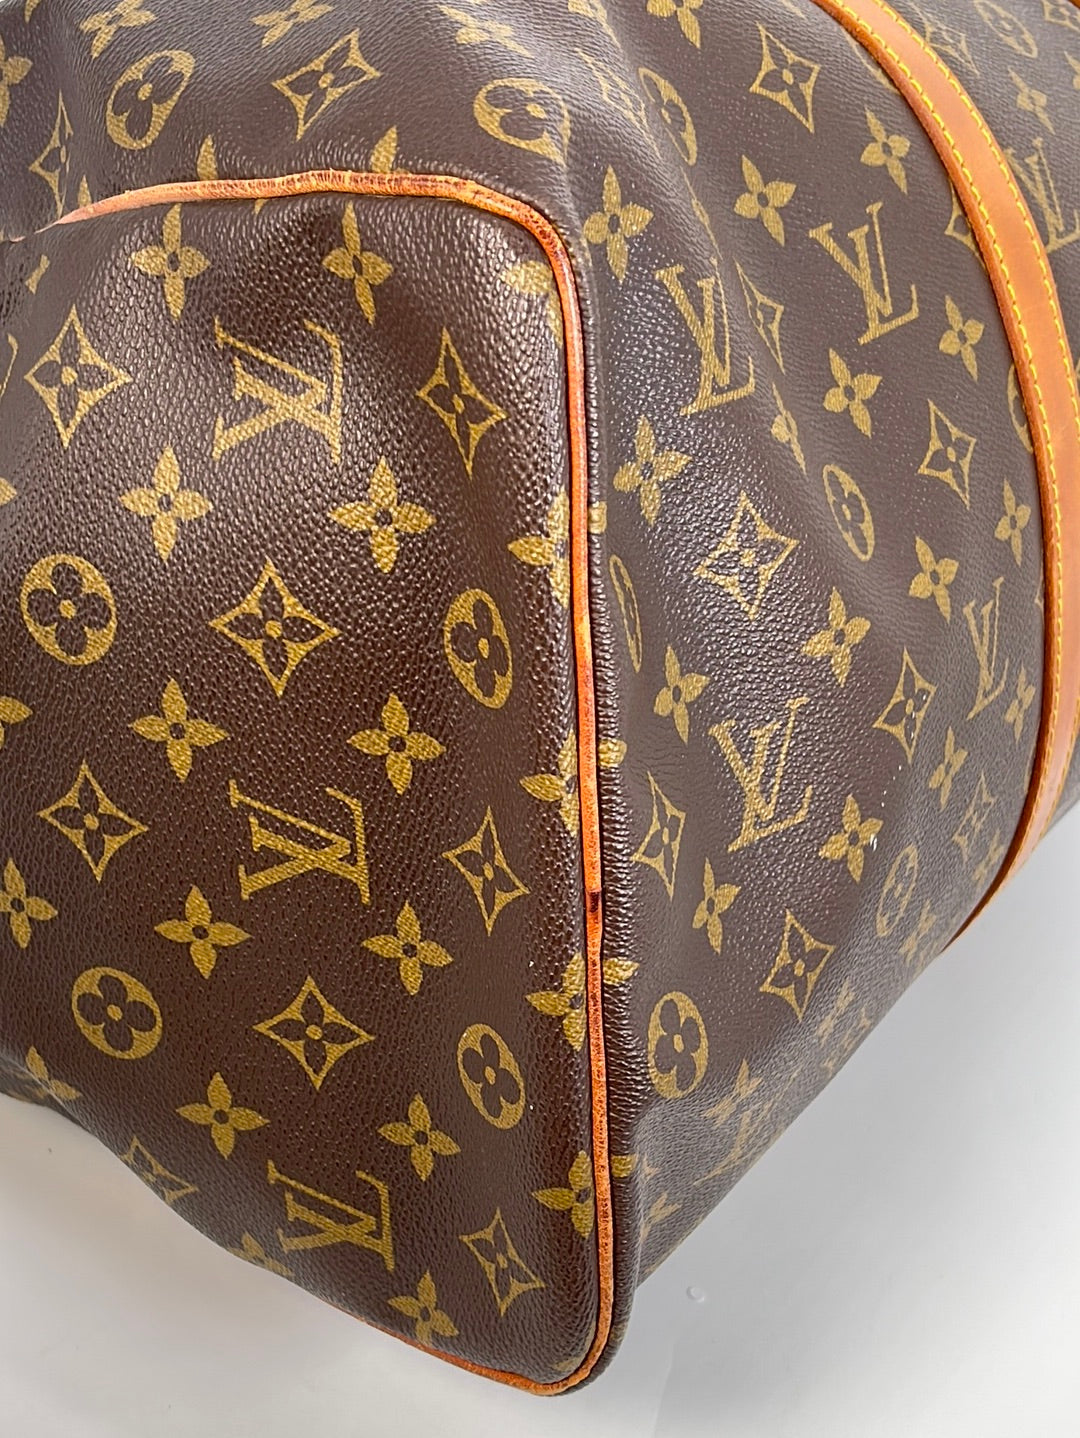 PRELOVED Louis Vuitton Keepall  50 Monogram Duffel Bag VI882 030123